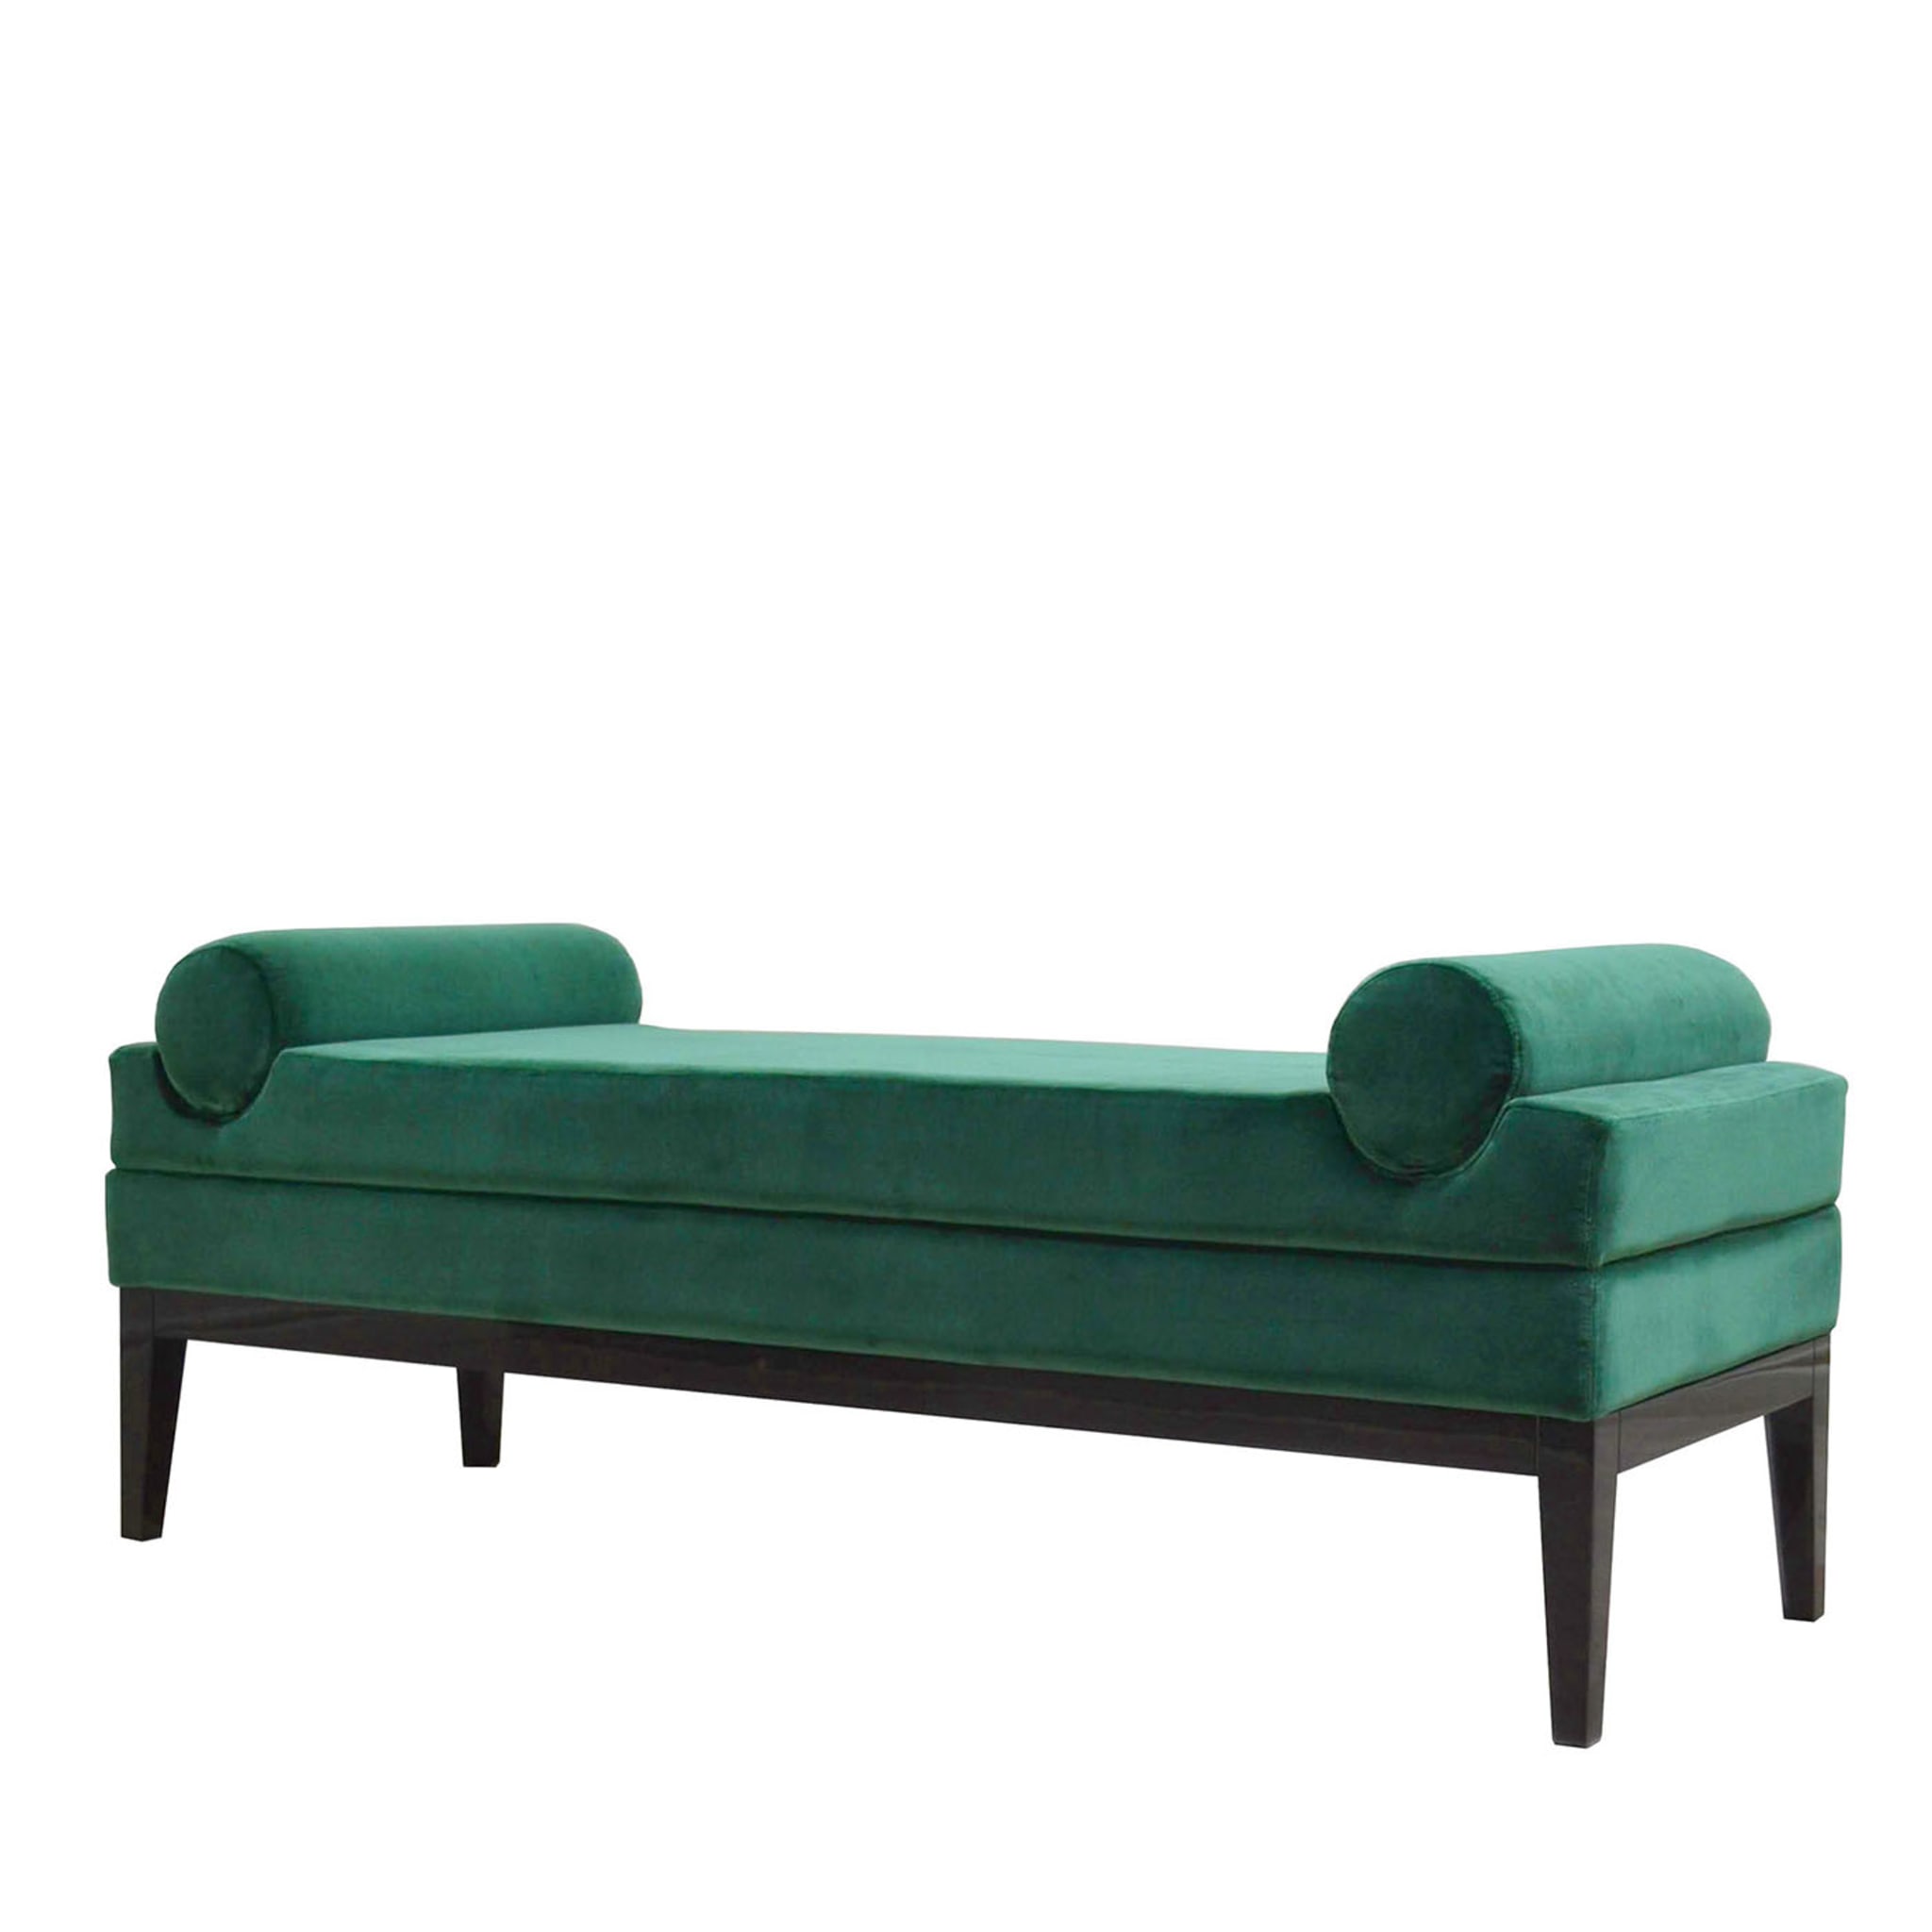 Italian Contemporary Upholstered Bench in Green Velvet Fabric - Main view